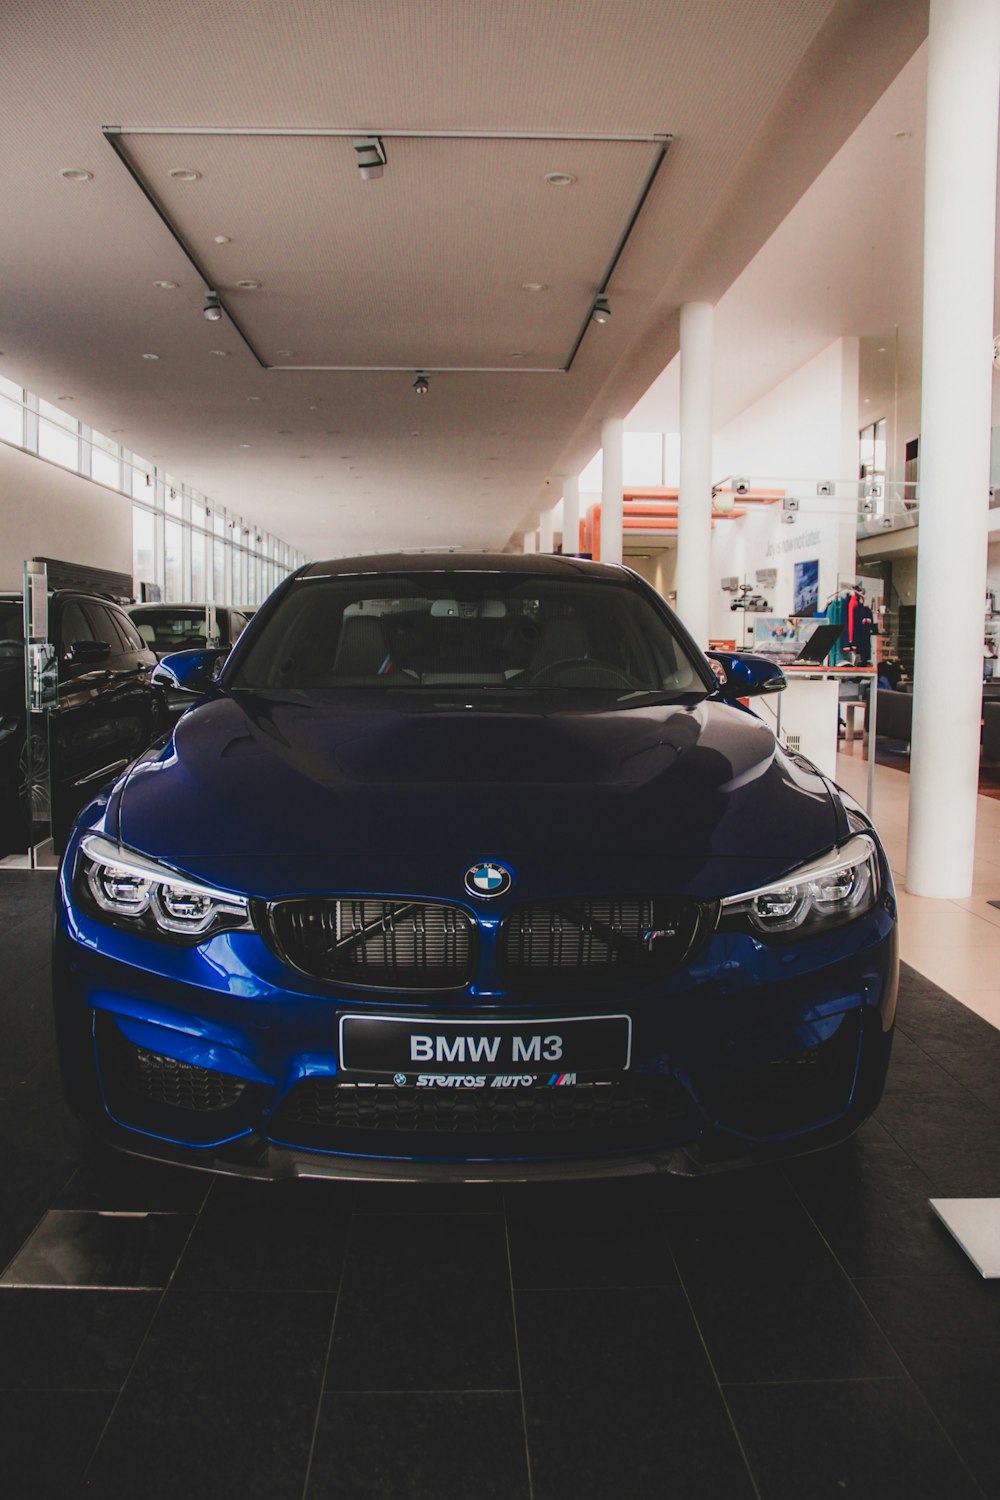 blue BMW vehicle inside building